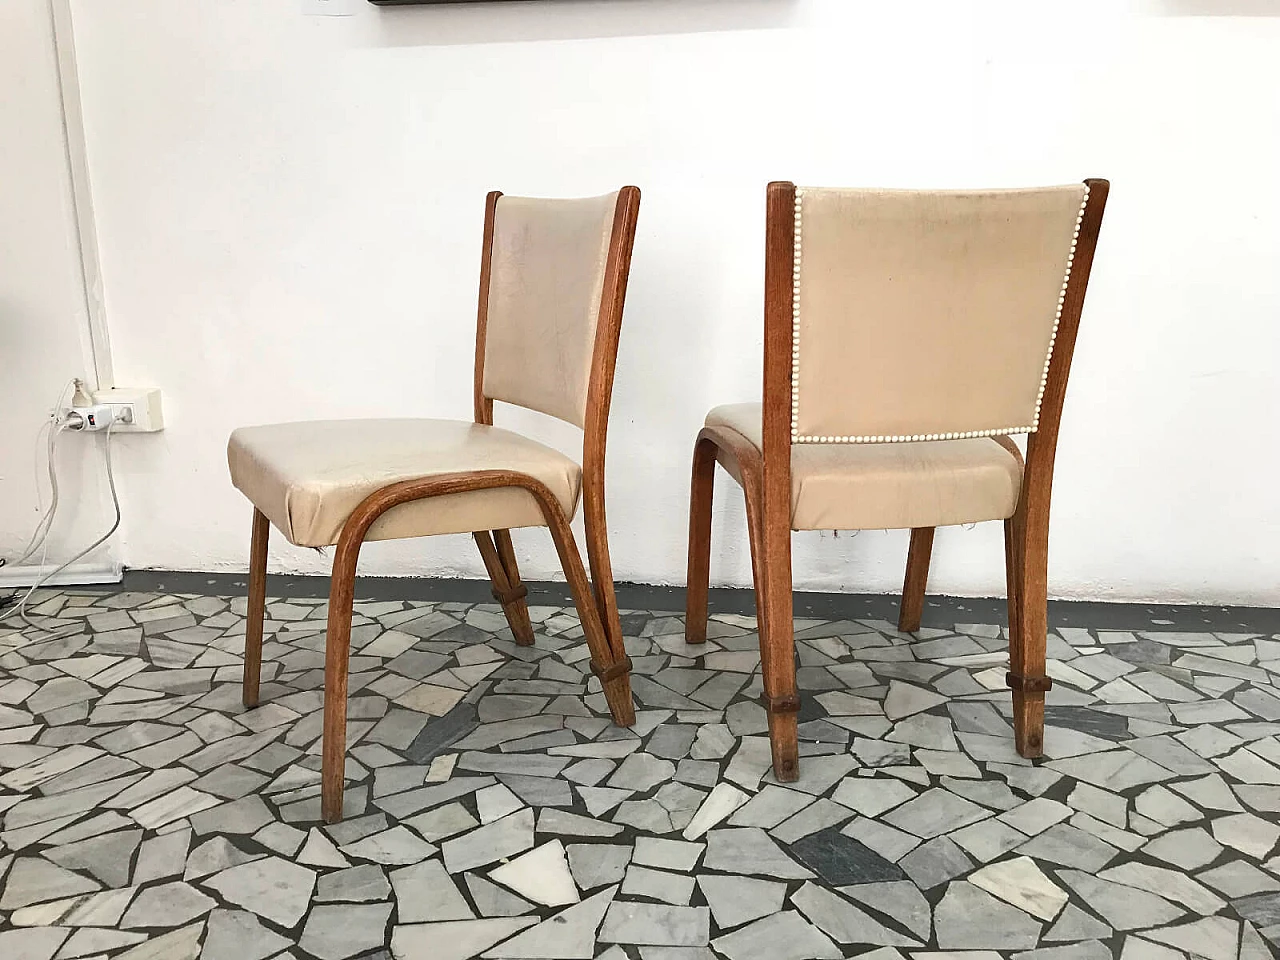 4 cream chairs, Bow-wood. 3